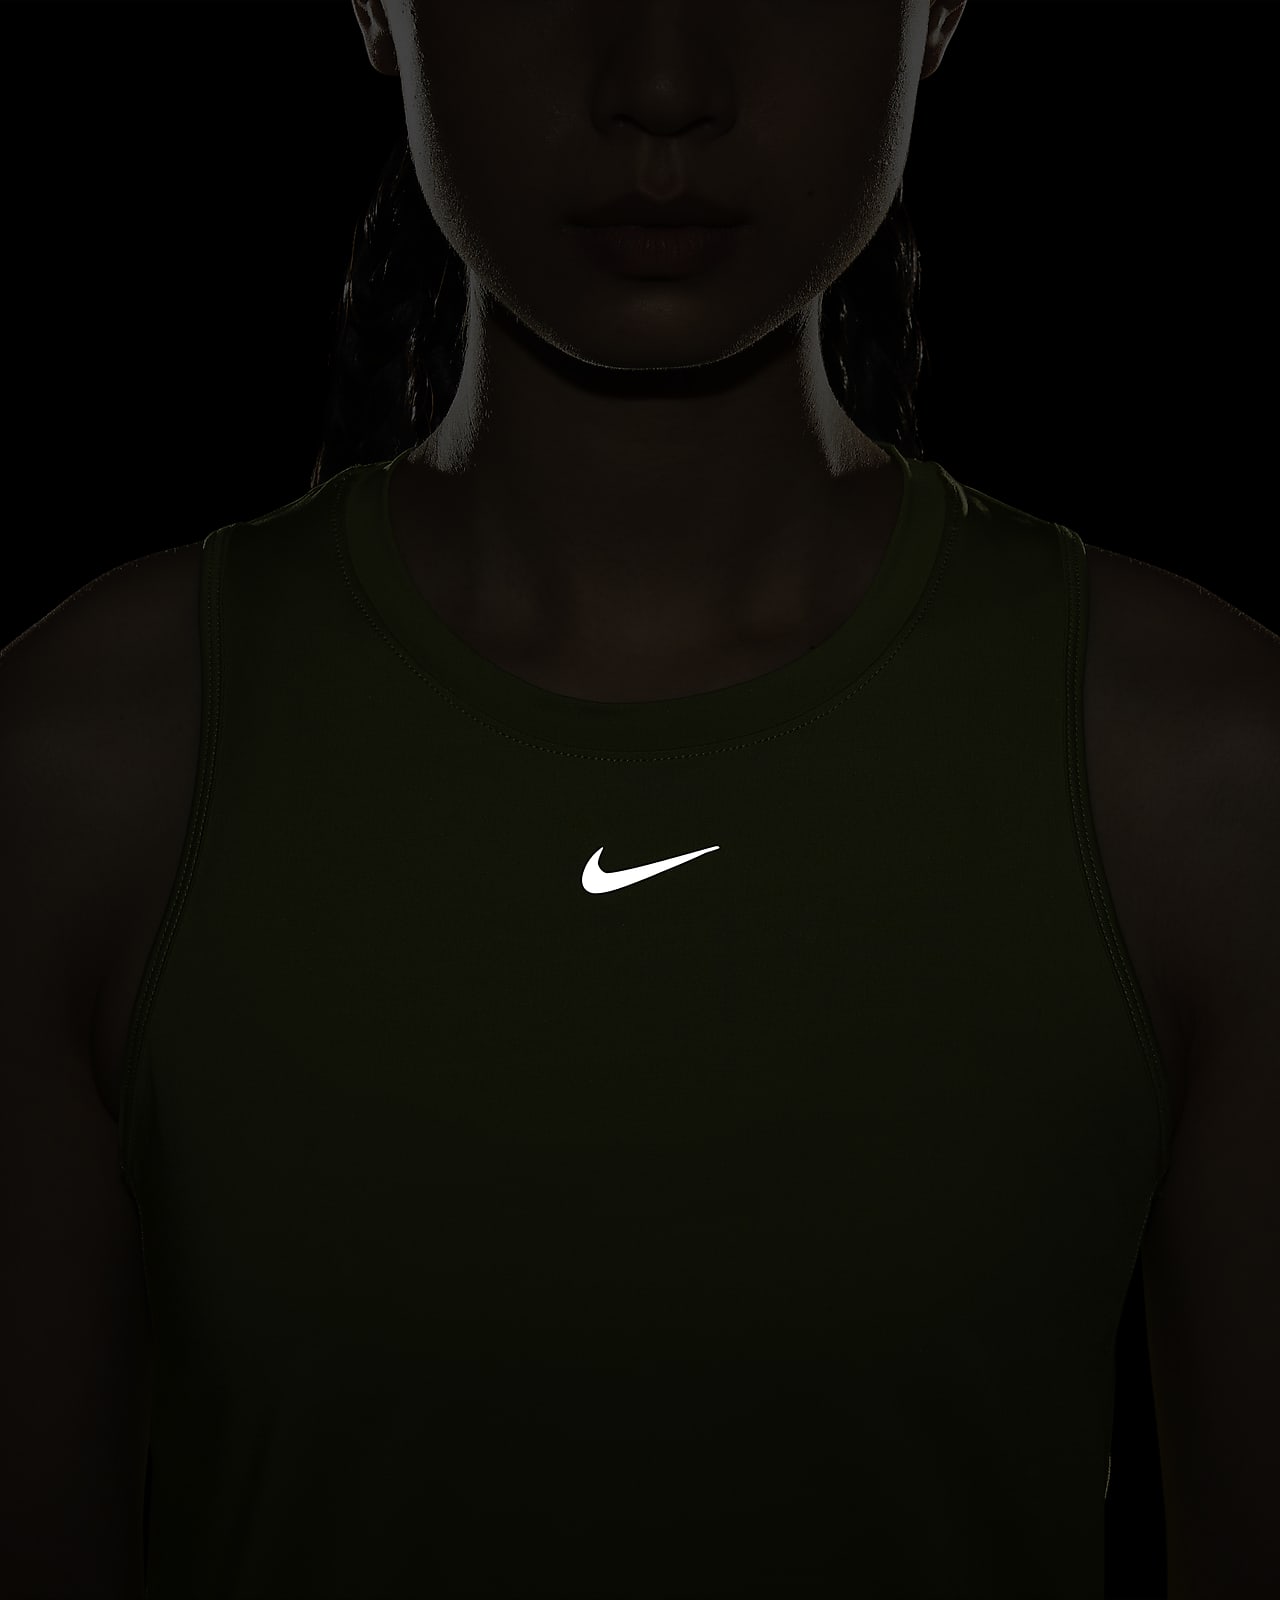 Nike One Classic Women's Dri-FIT Tank Top